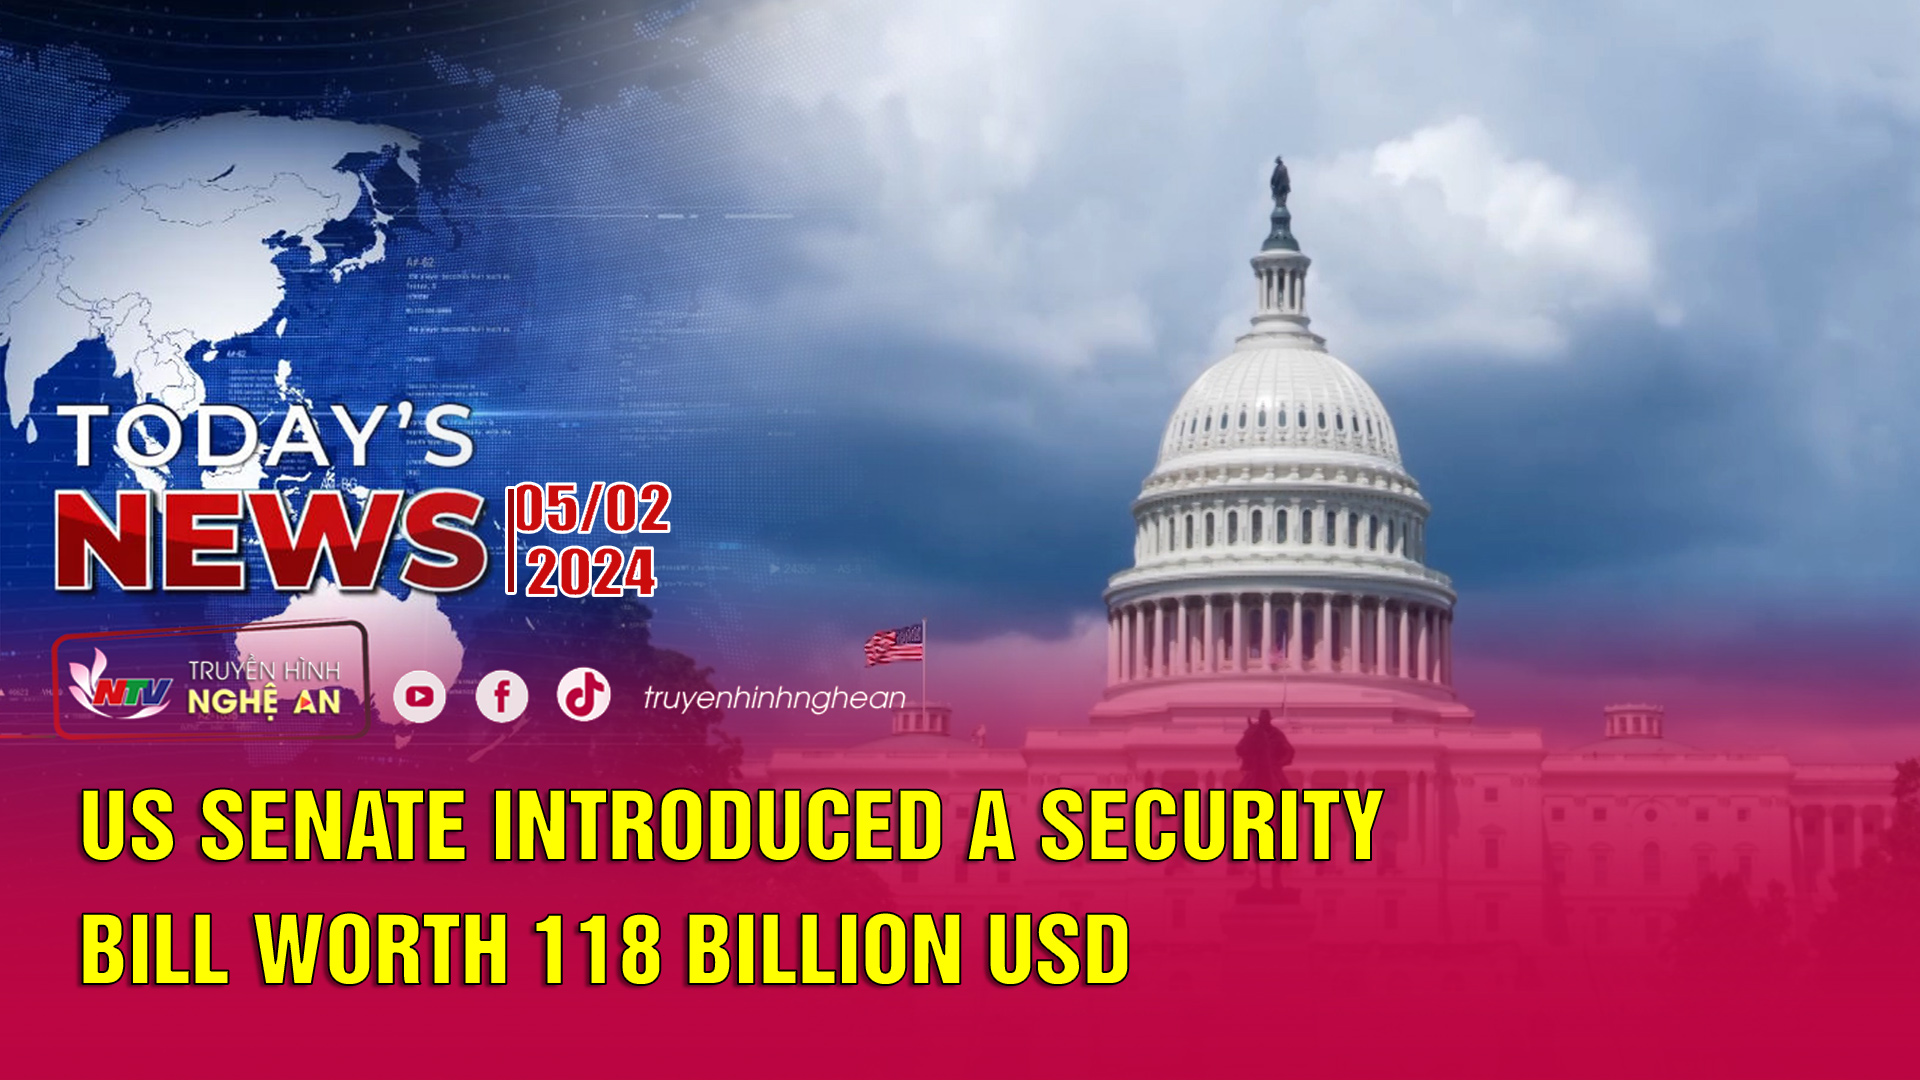 Today's News - 05/02/2024: US Senate introduced a security bill worth 118 billion USD